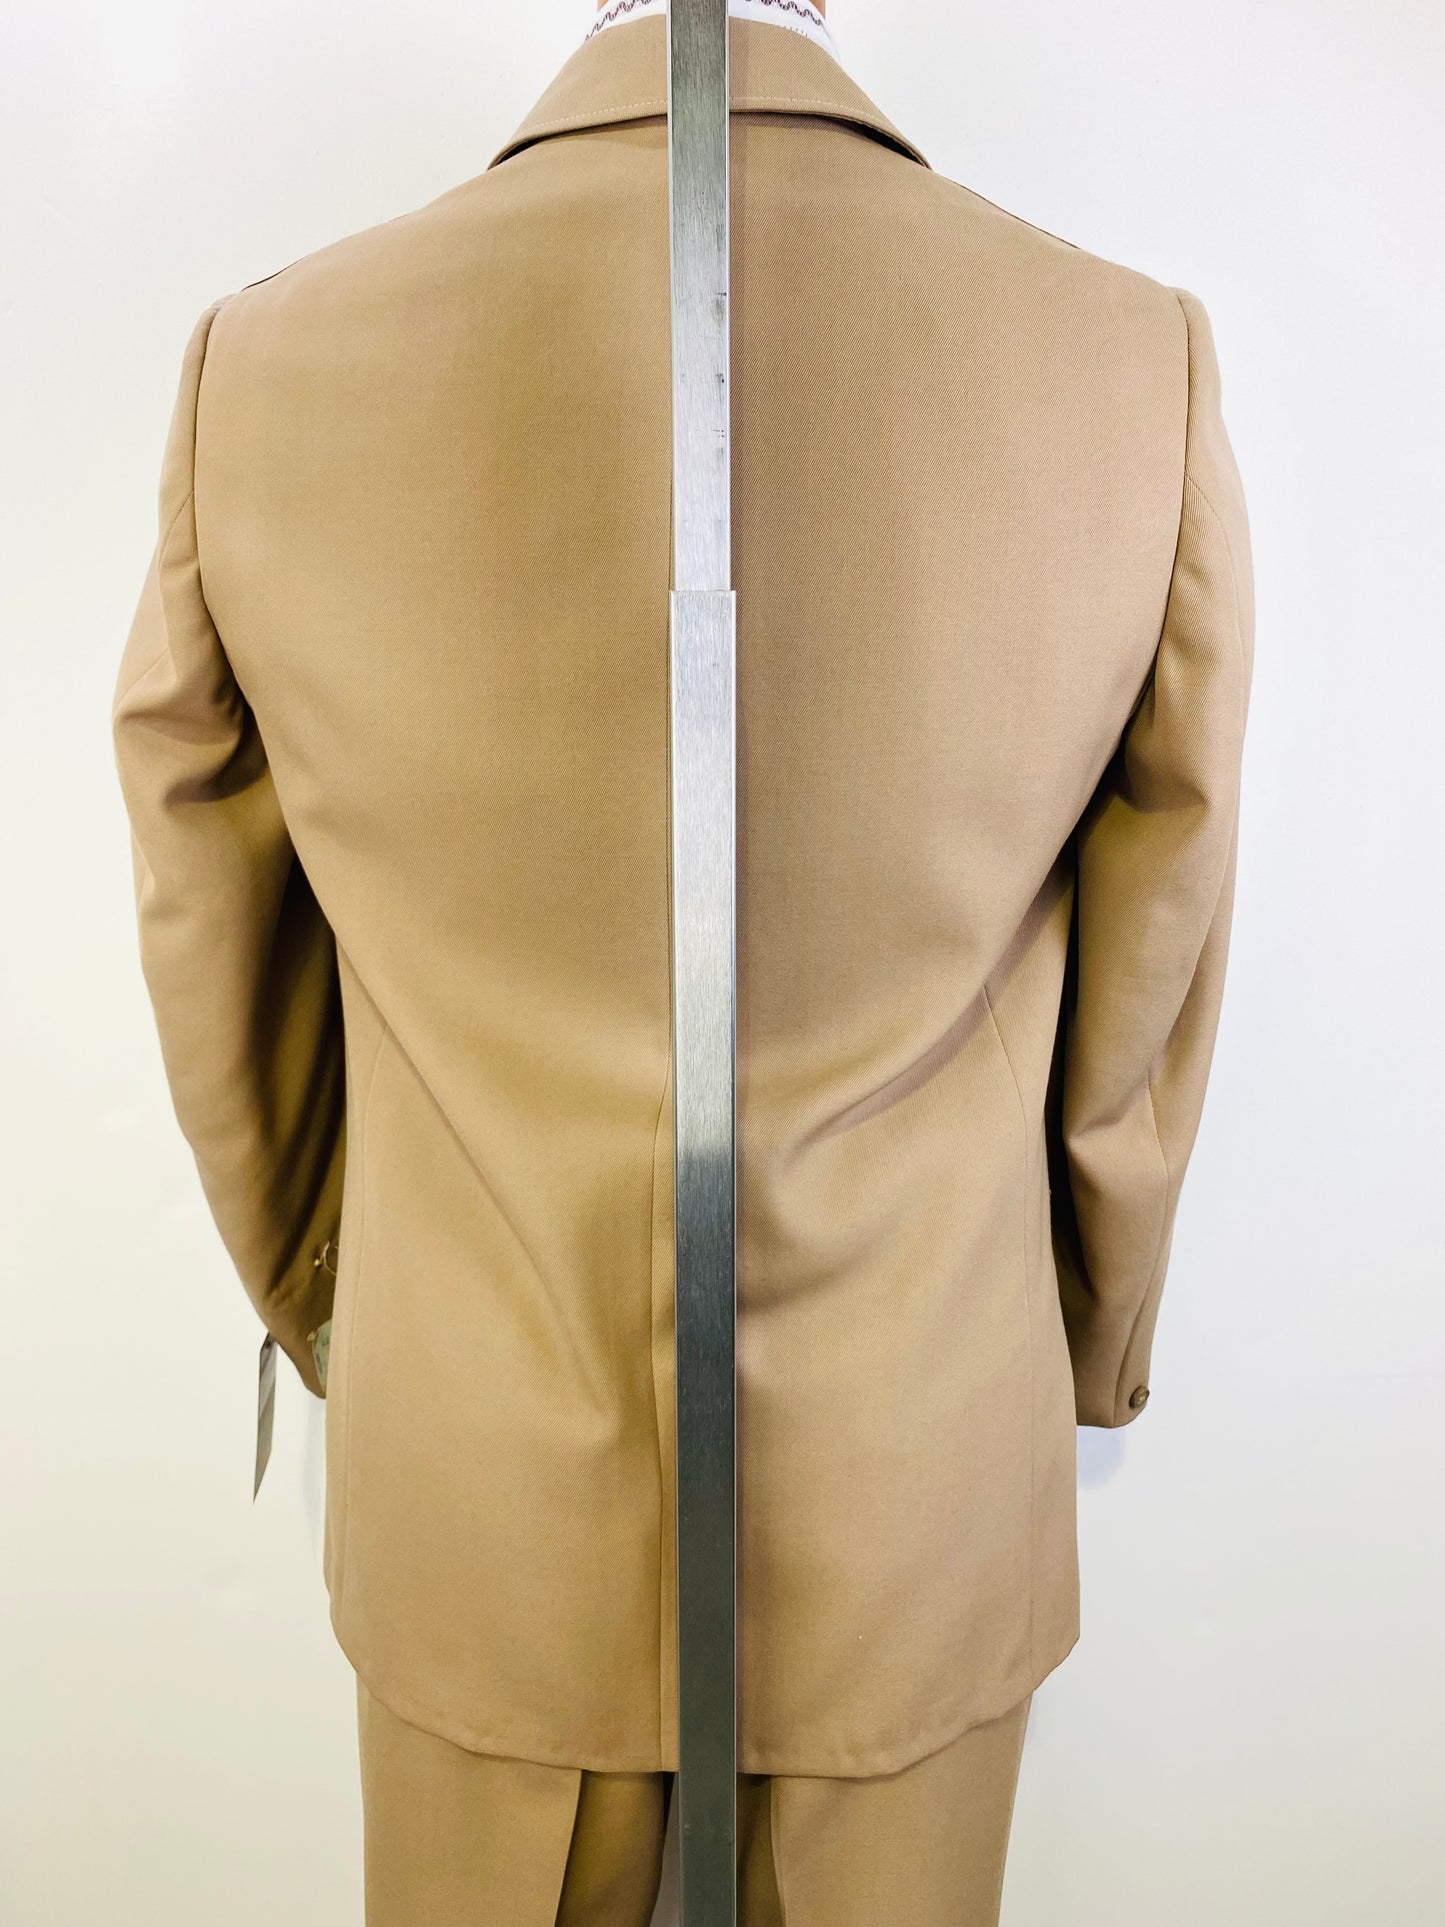 Early 1970s Vintage Deadstock Men's Suit, Brown Western Style 2-Piece Leisure Suit, Suede Trim, NOS, C42